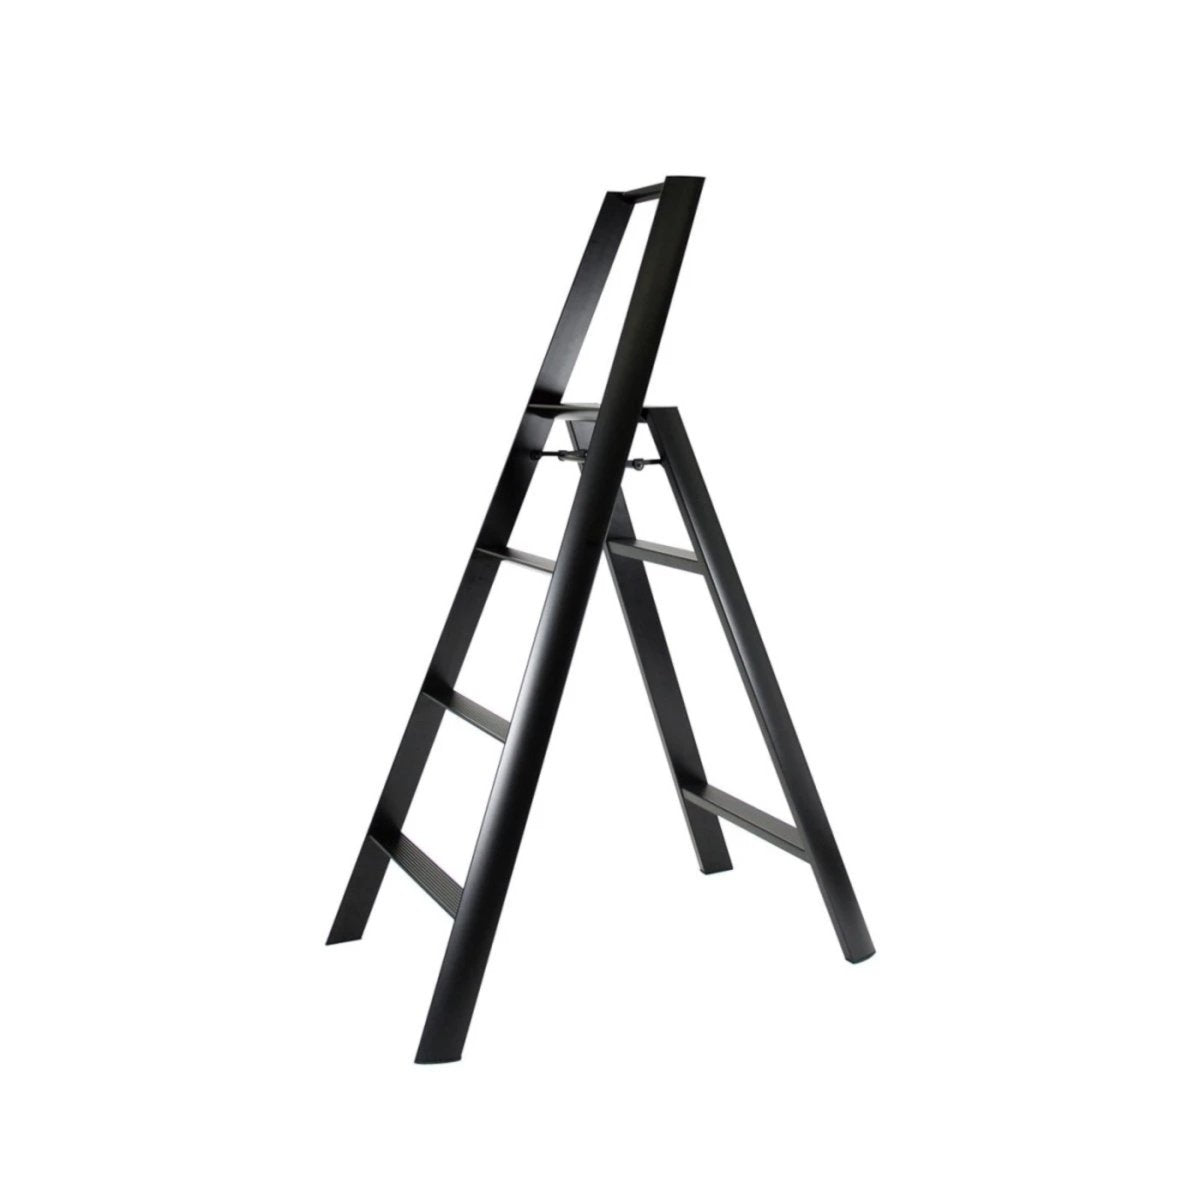 4 Step Ladder Black - Minimax